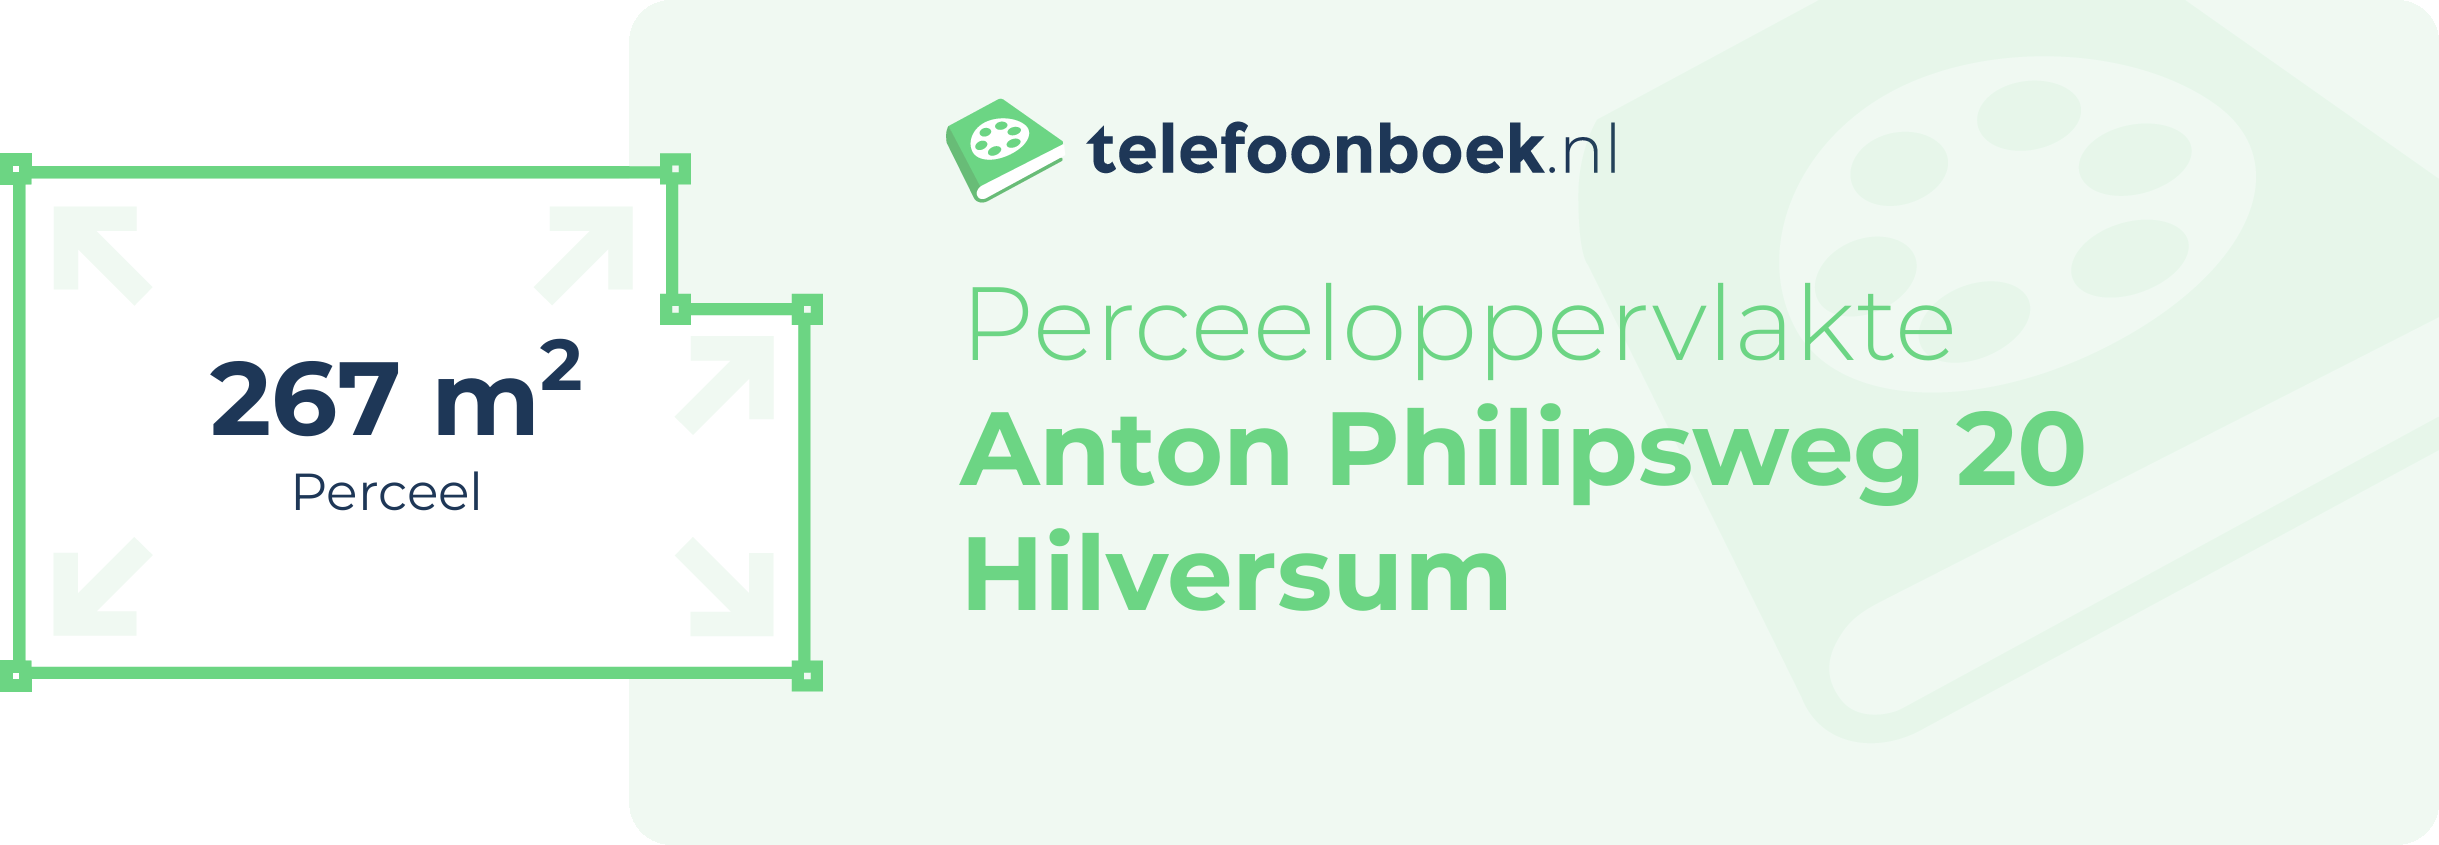 Perceeloppervlakte Anton Philipsweg 20 Hilversum